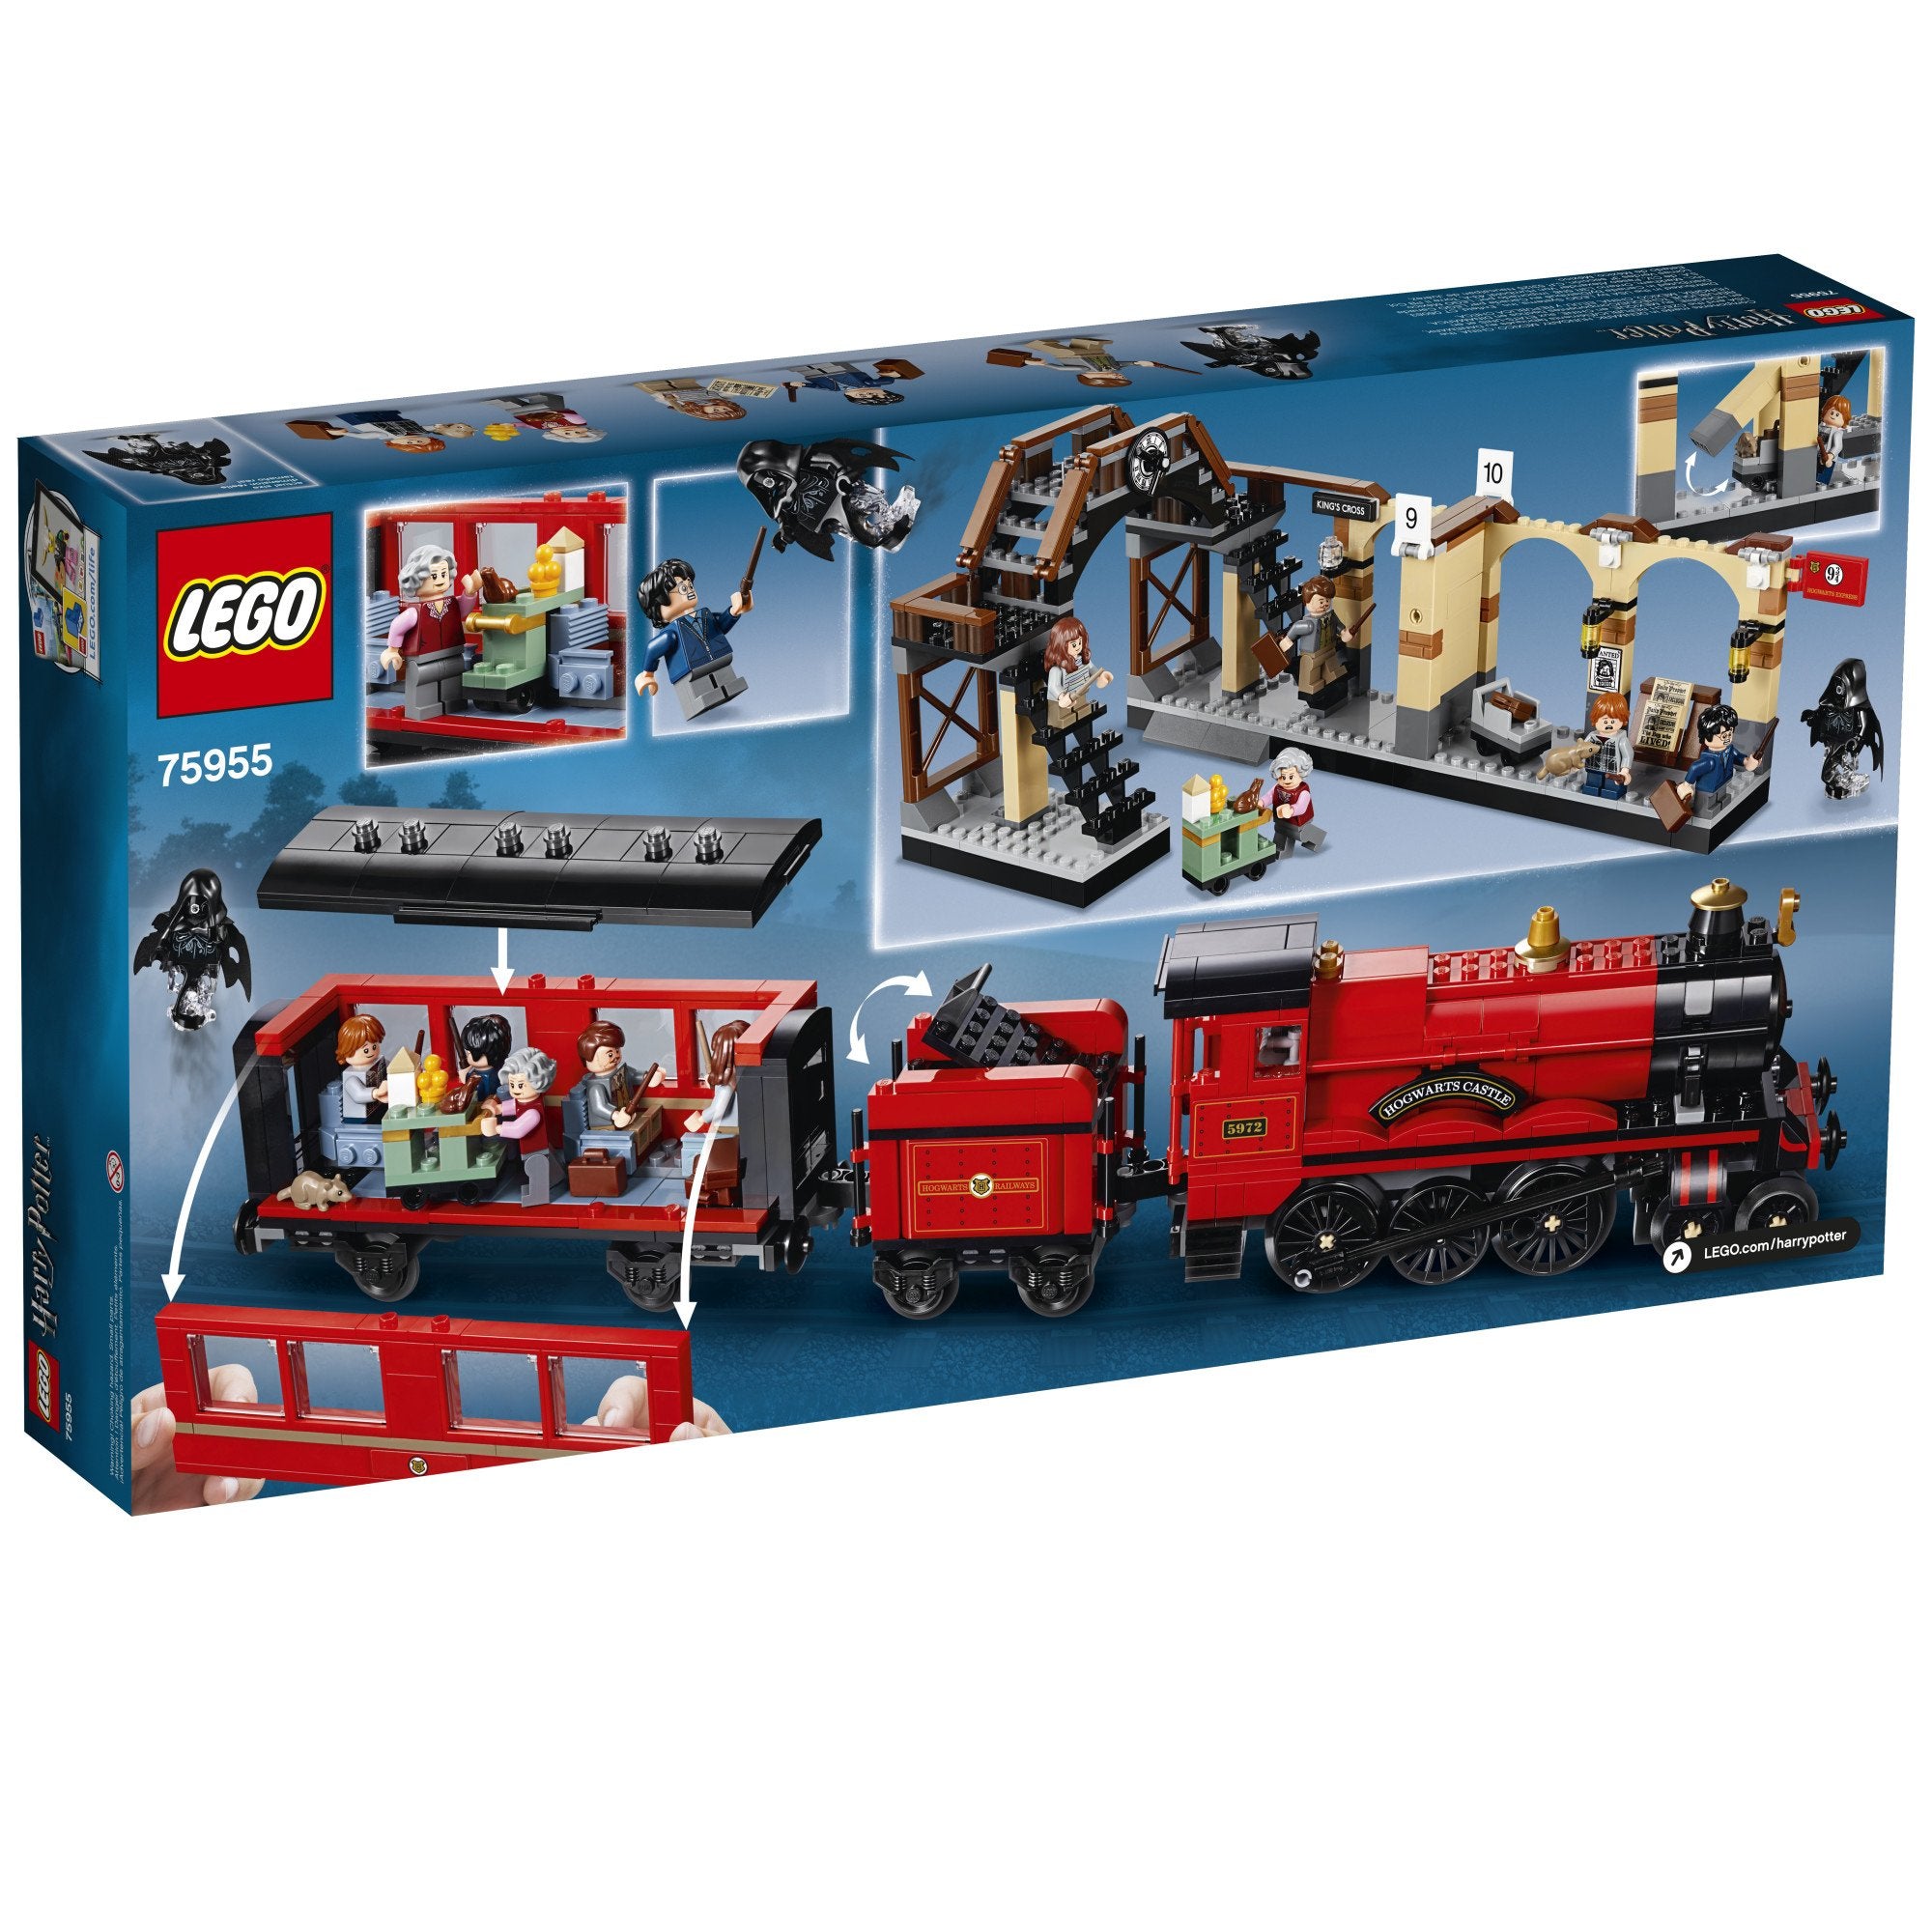 LEGO Harry Potter Hogwarts Express 75955 Building Kit (801 Piece), Multi